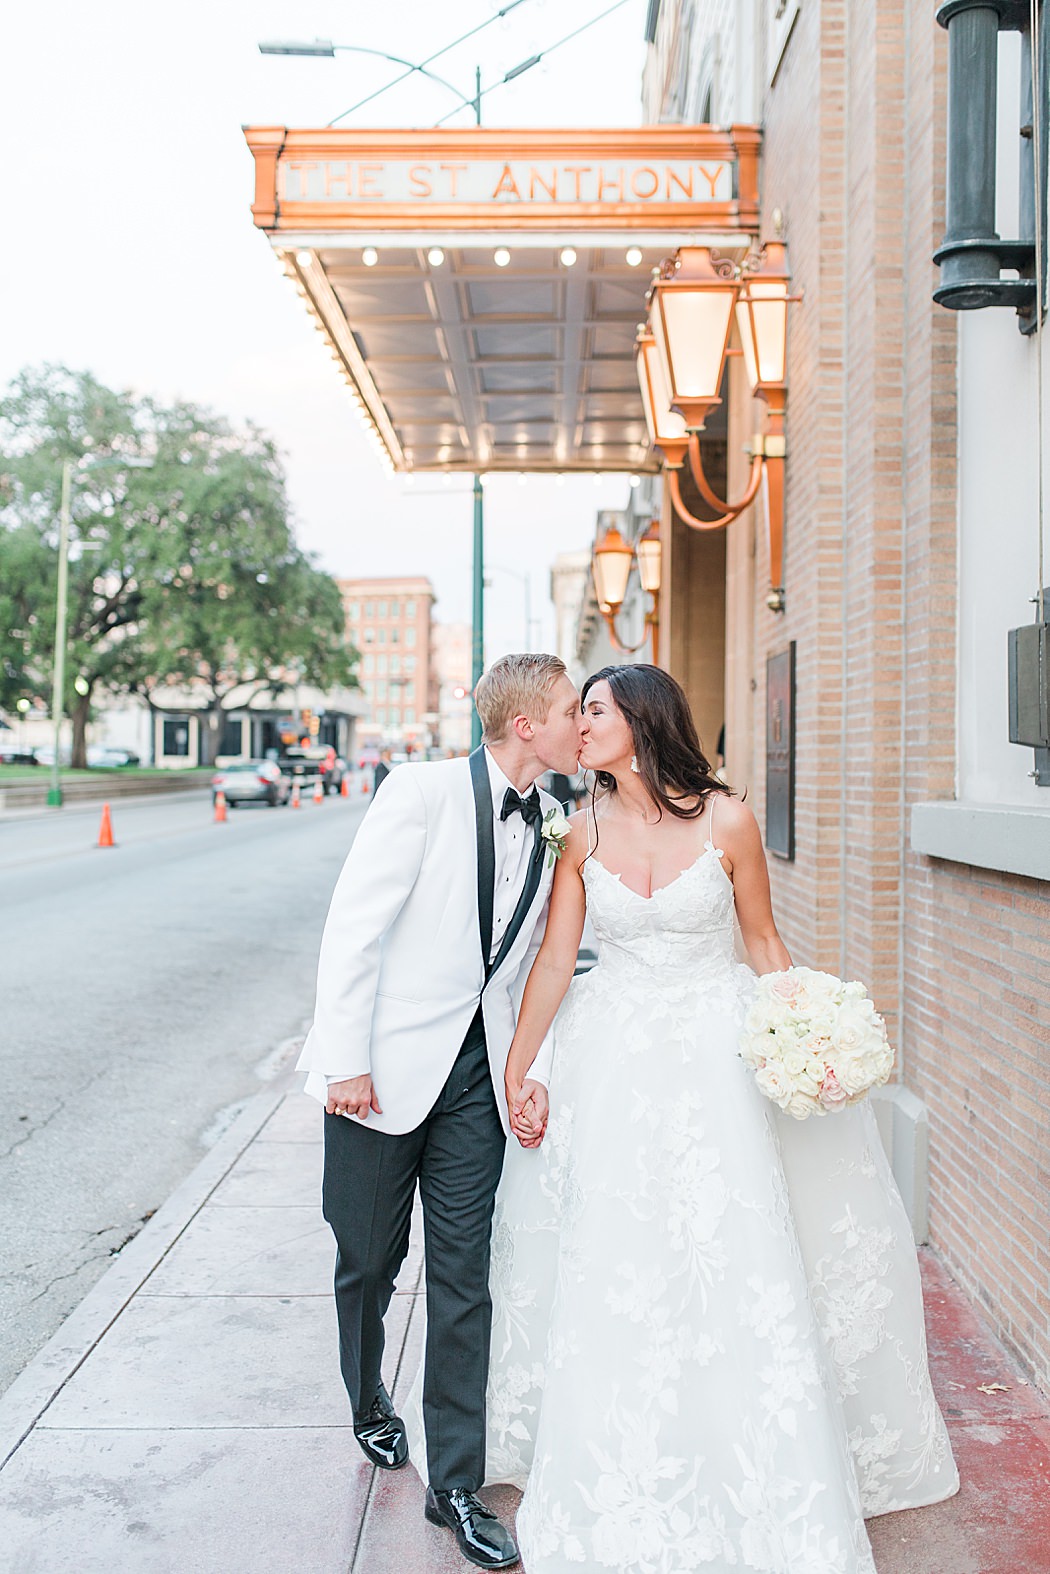 The St Anthony Hotel Wedding Reception San Antonio first Presbyterian Church Ceremony by Allison Jeffers Photography 0095